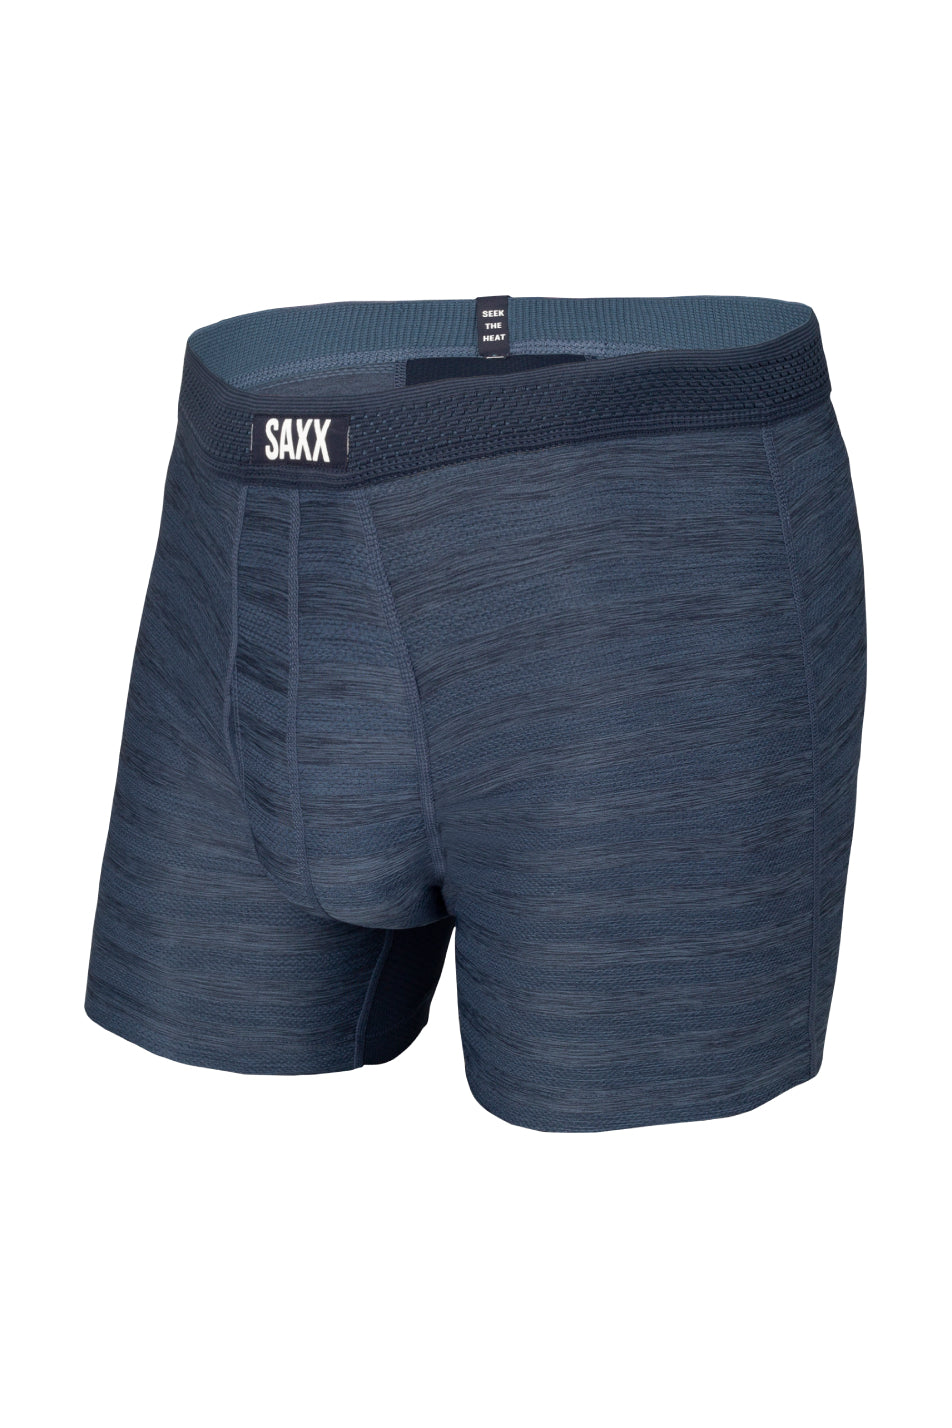 SAXX Men's Droptemp Cooling Mesh Boxer Brief